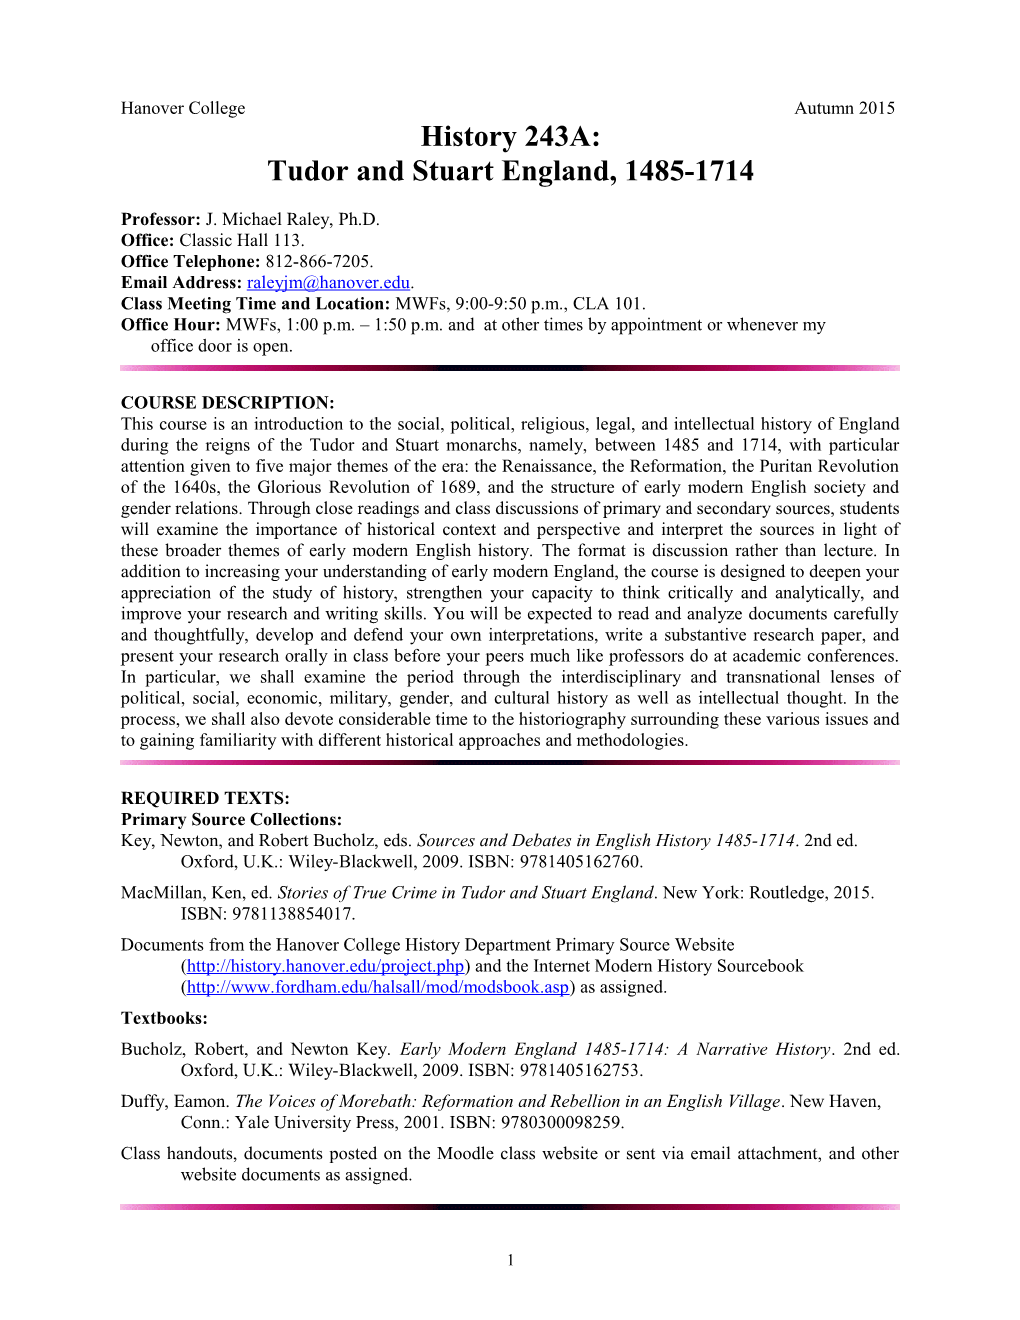 Tudor and Stuart England, 1485-1714